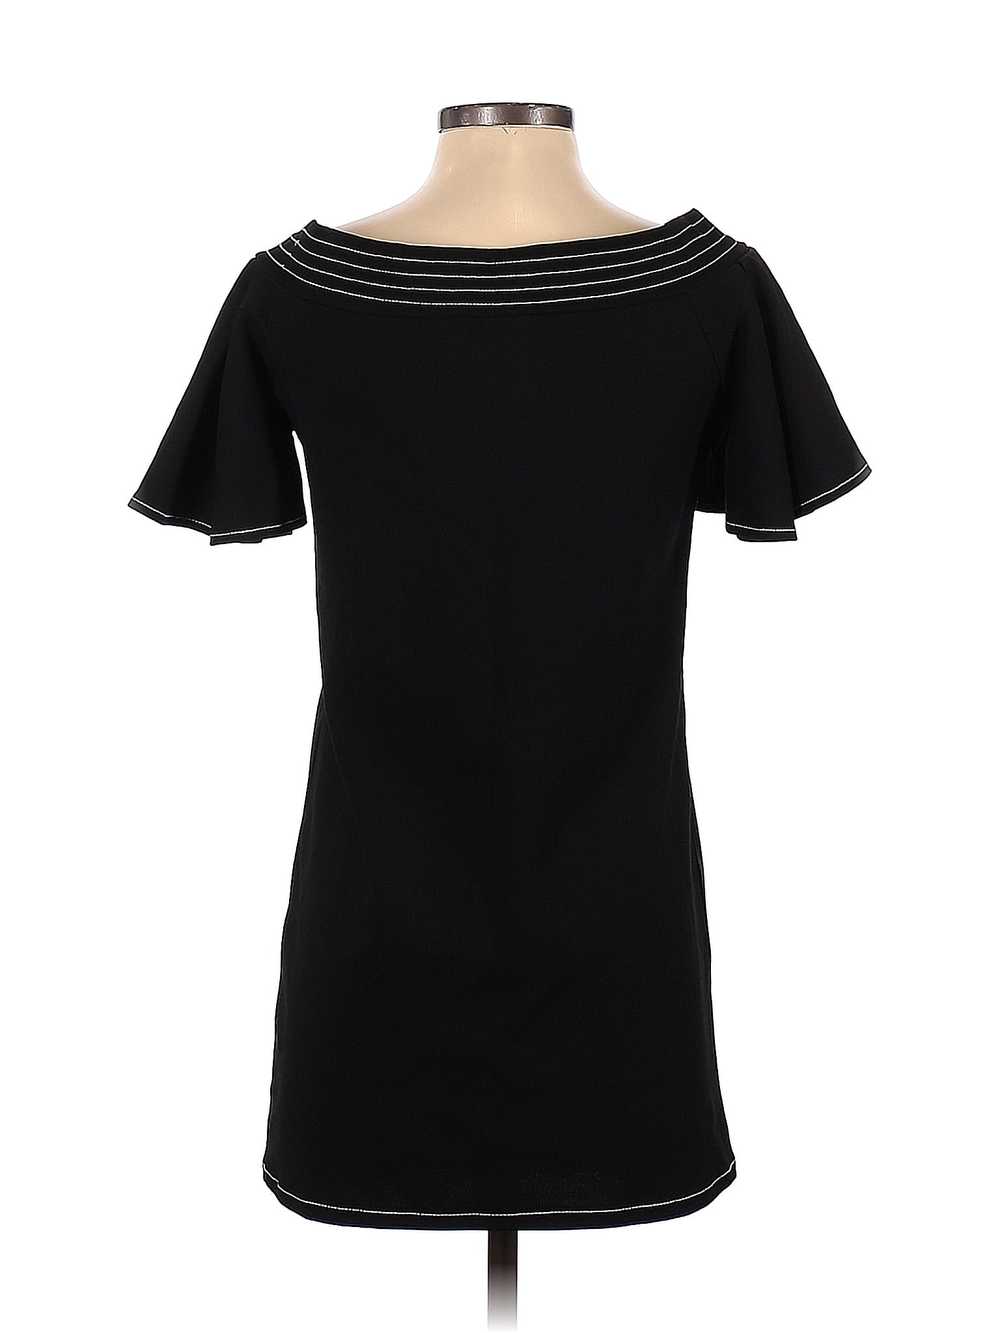 Trafaluc by Zara Women Black Cocktail Dress S - image 2